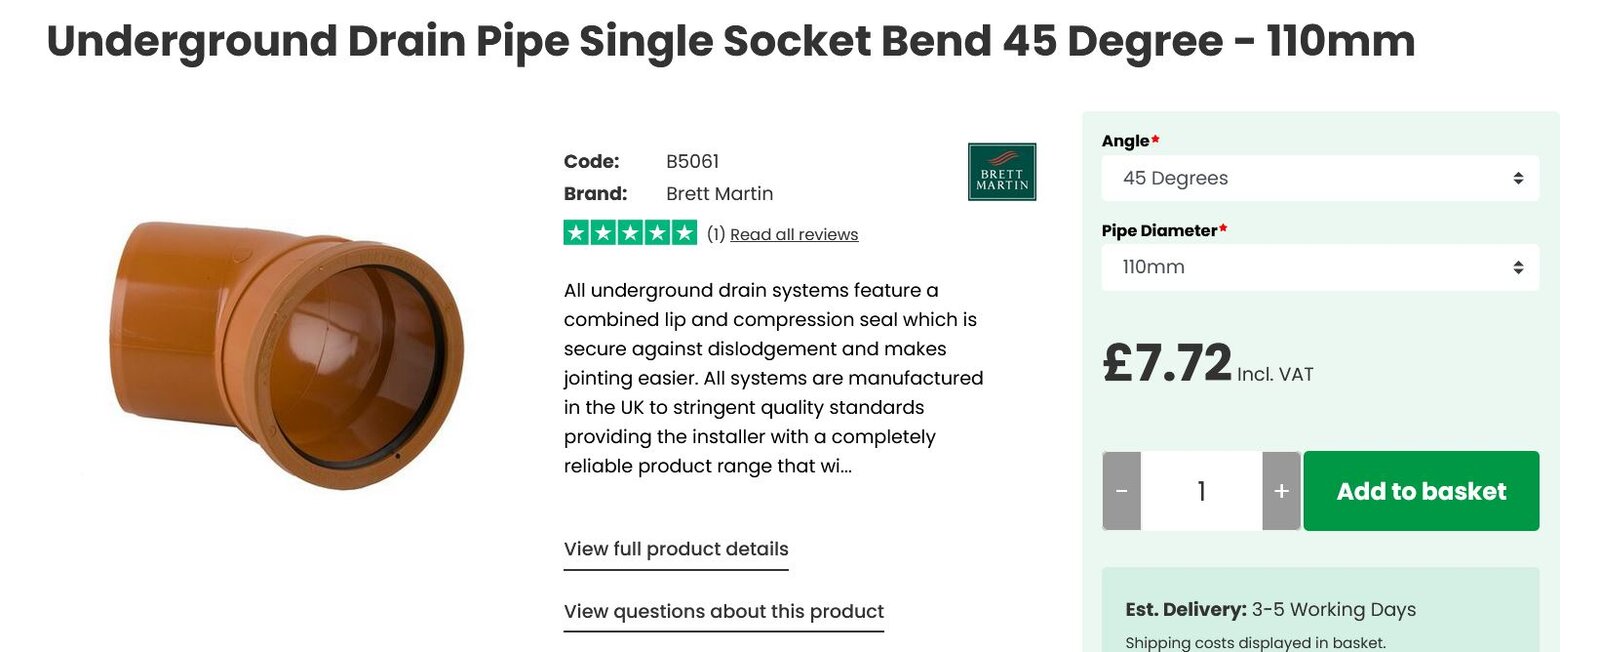 Single Socket Bend 45 Degree.JPG